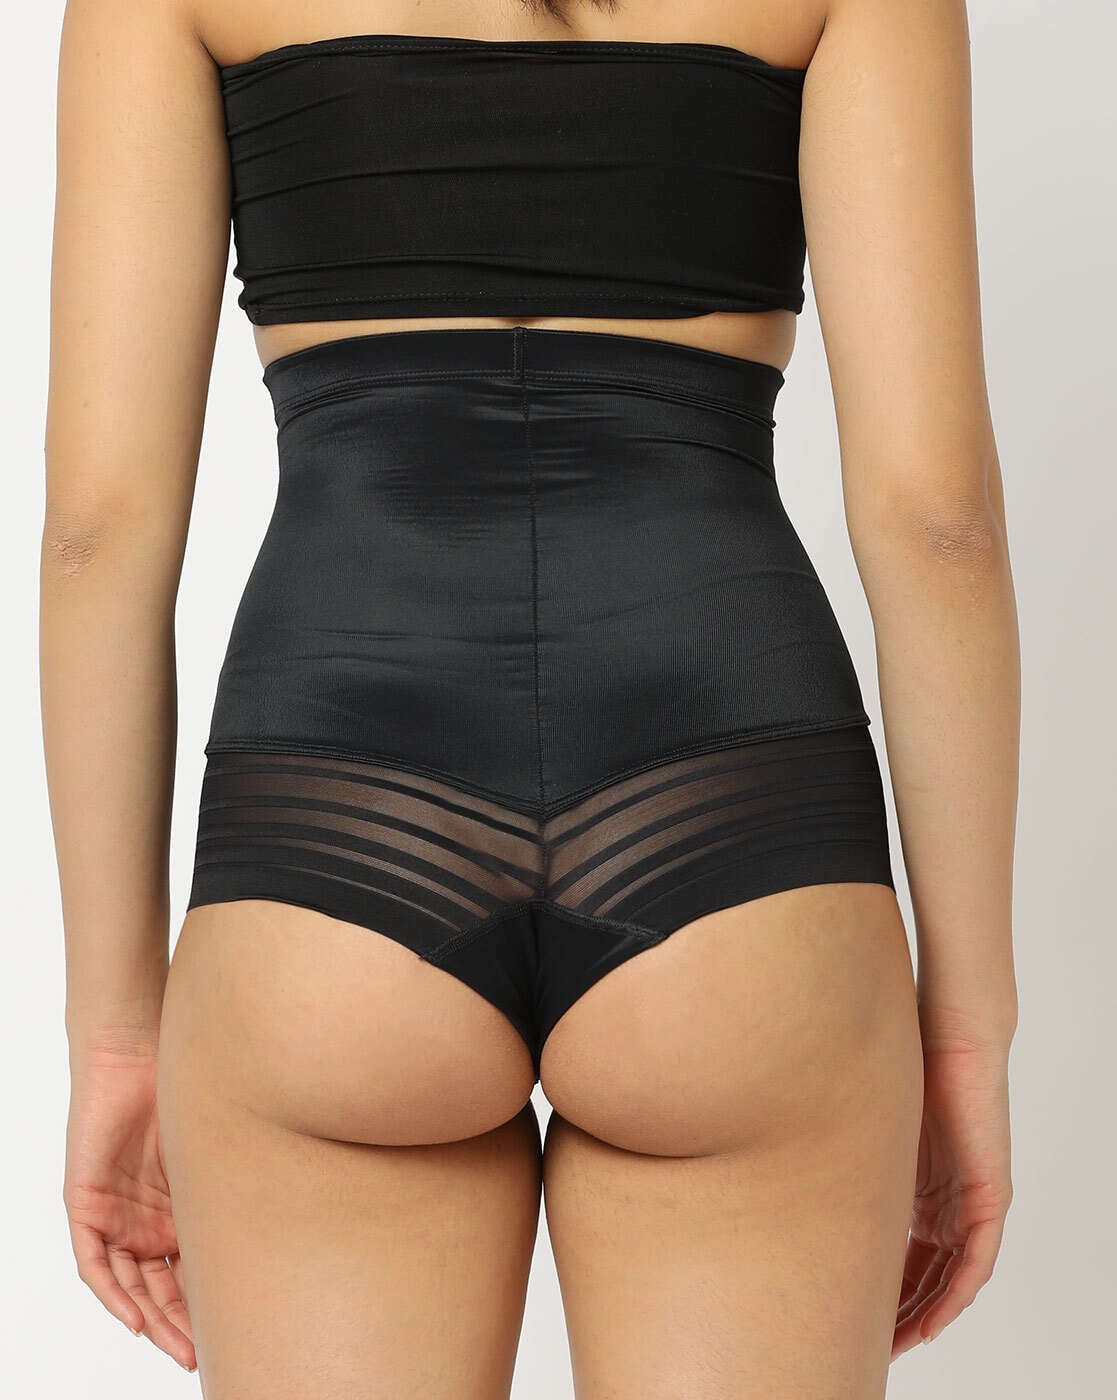 Super Fit™ High Waisted ShapeWear Panty【Black Color】【2PCS/PACK